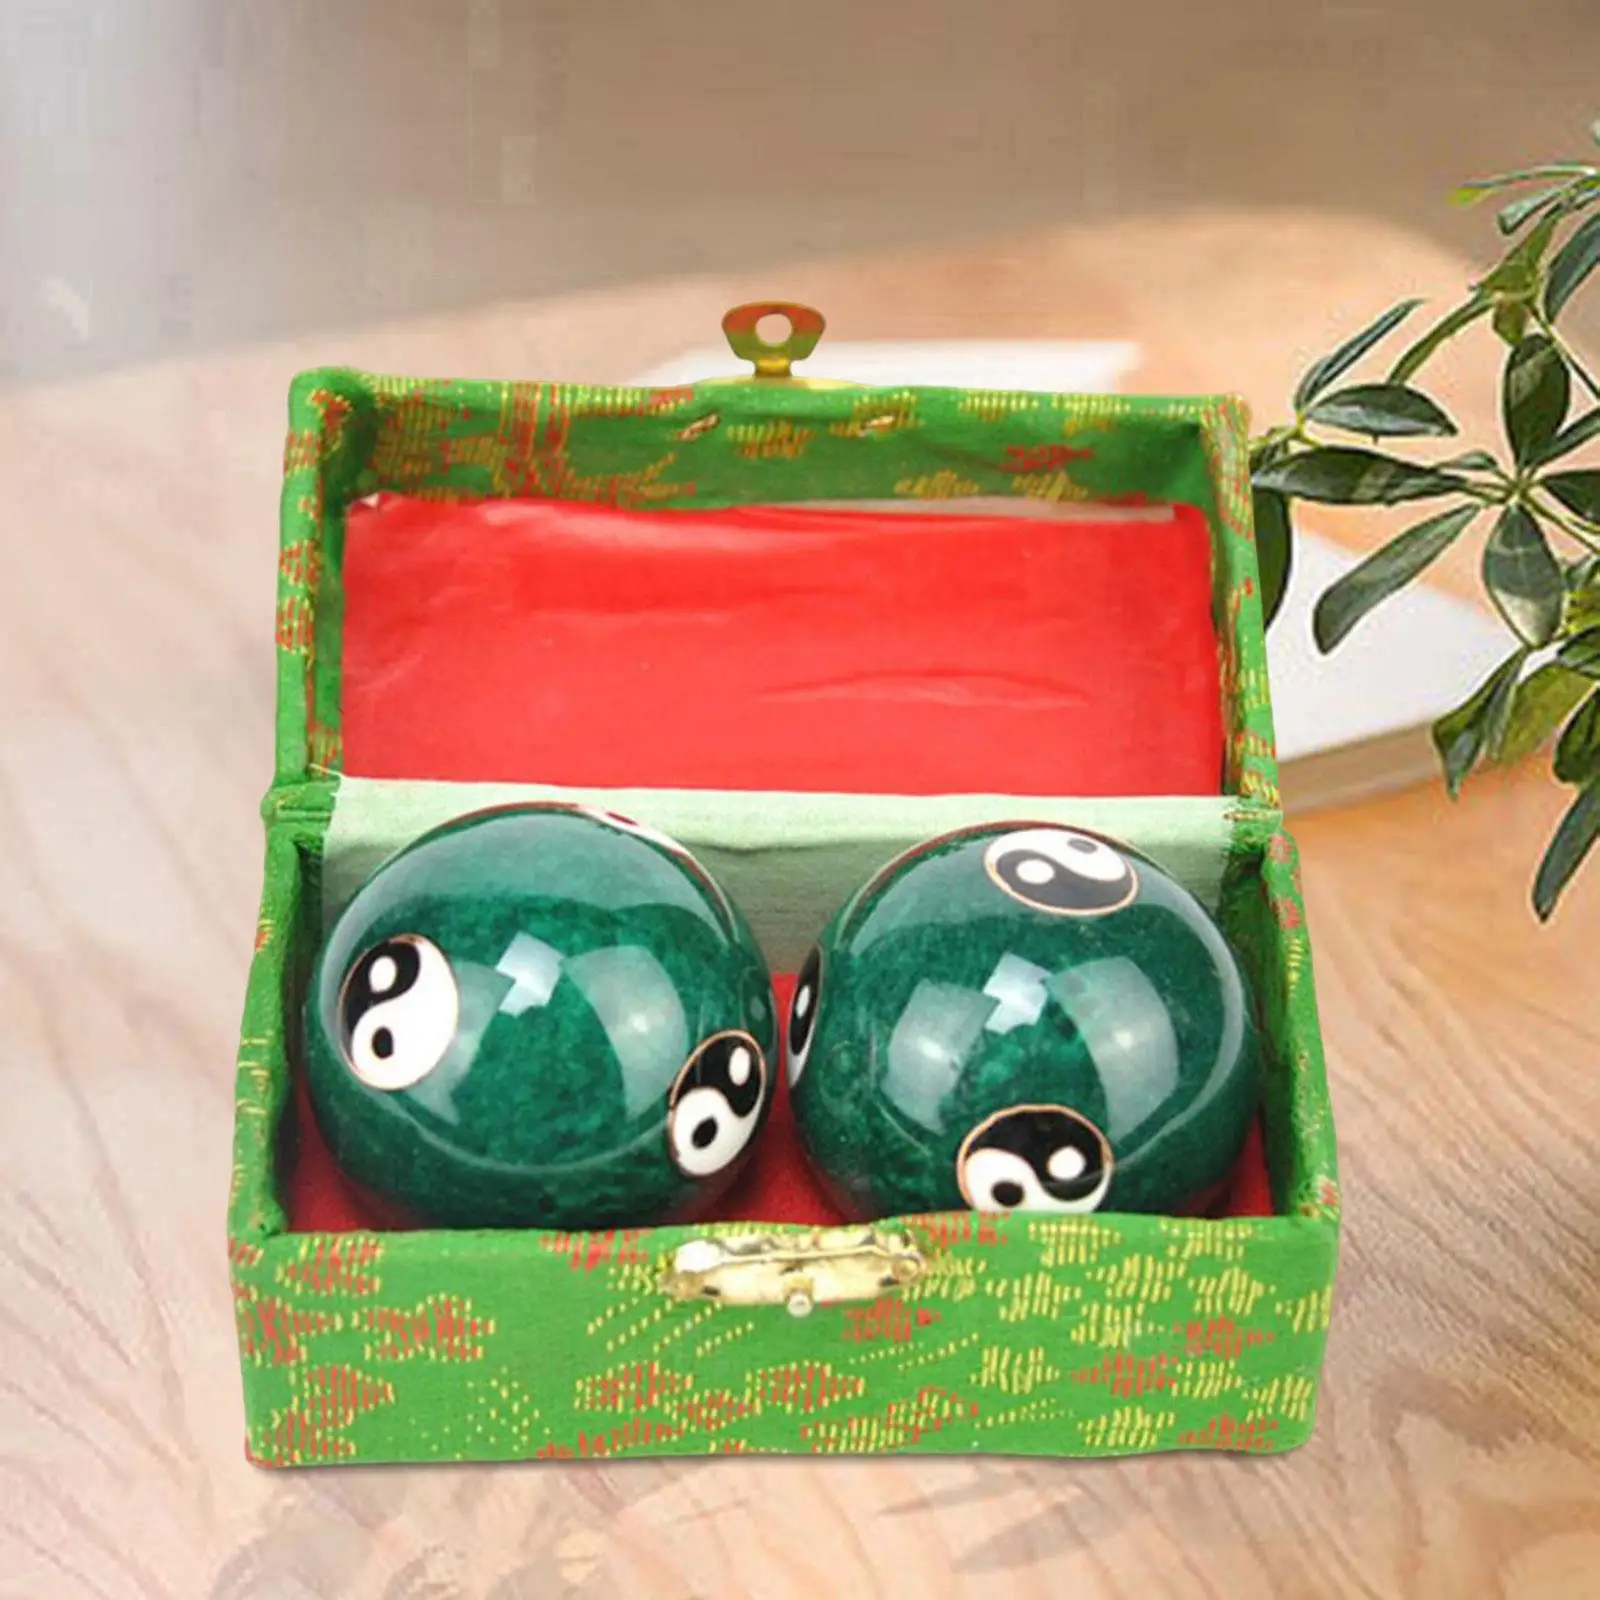 2x Massage Balls with Storage Box Hand Wrist Strengthening Chinese Baoding Balls for Seniors Children Elderly Middle Aged People